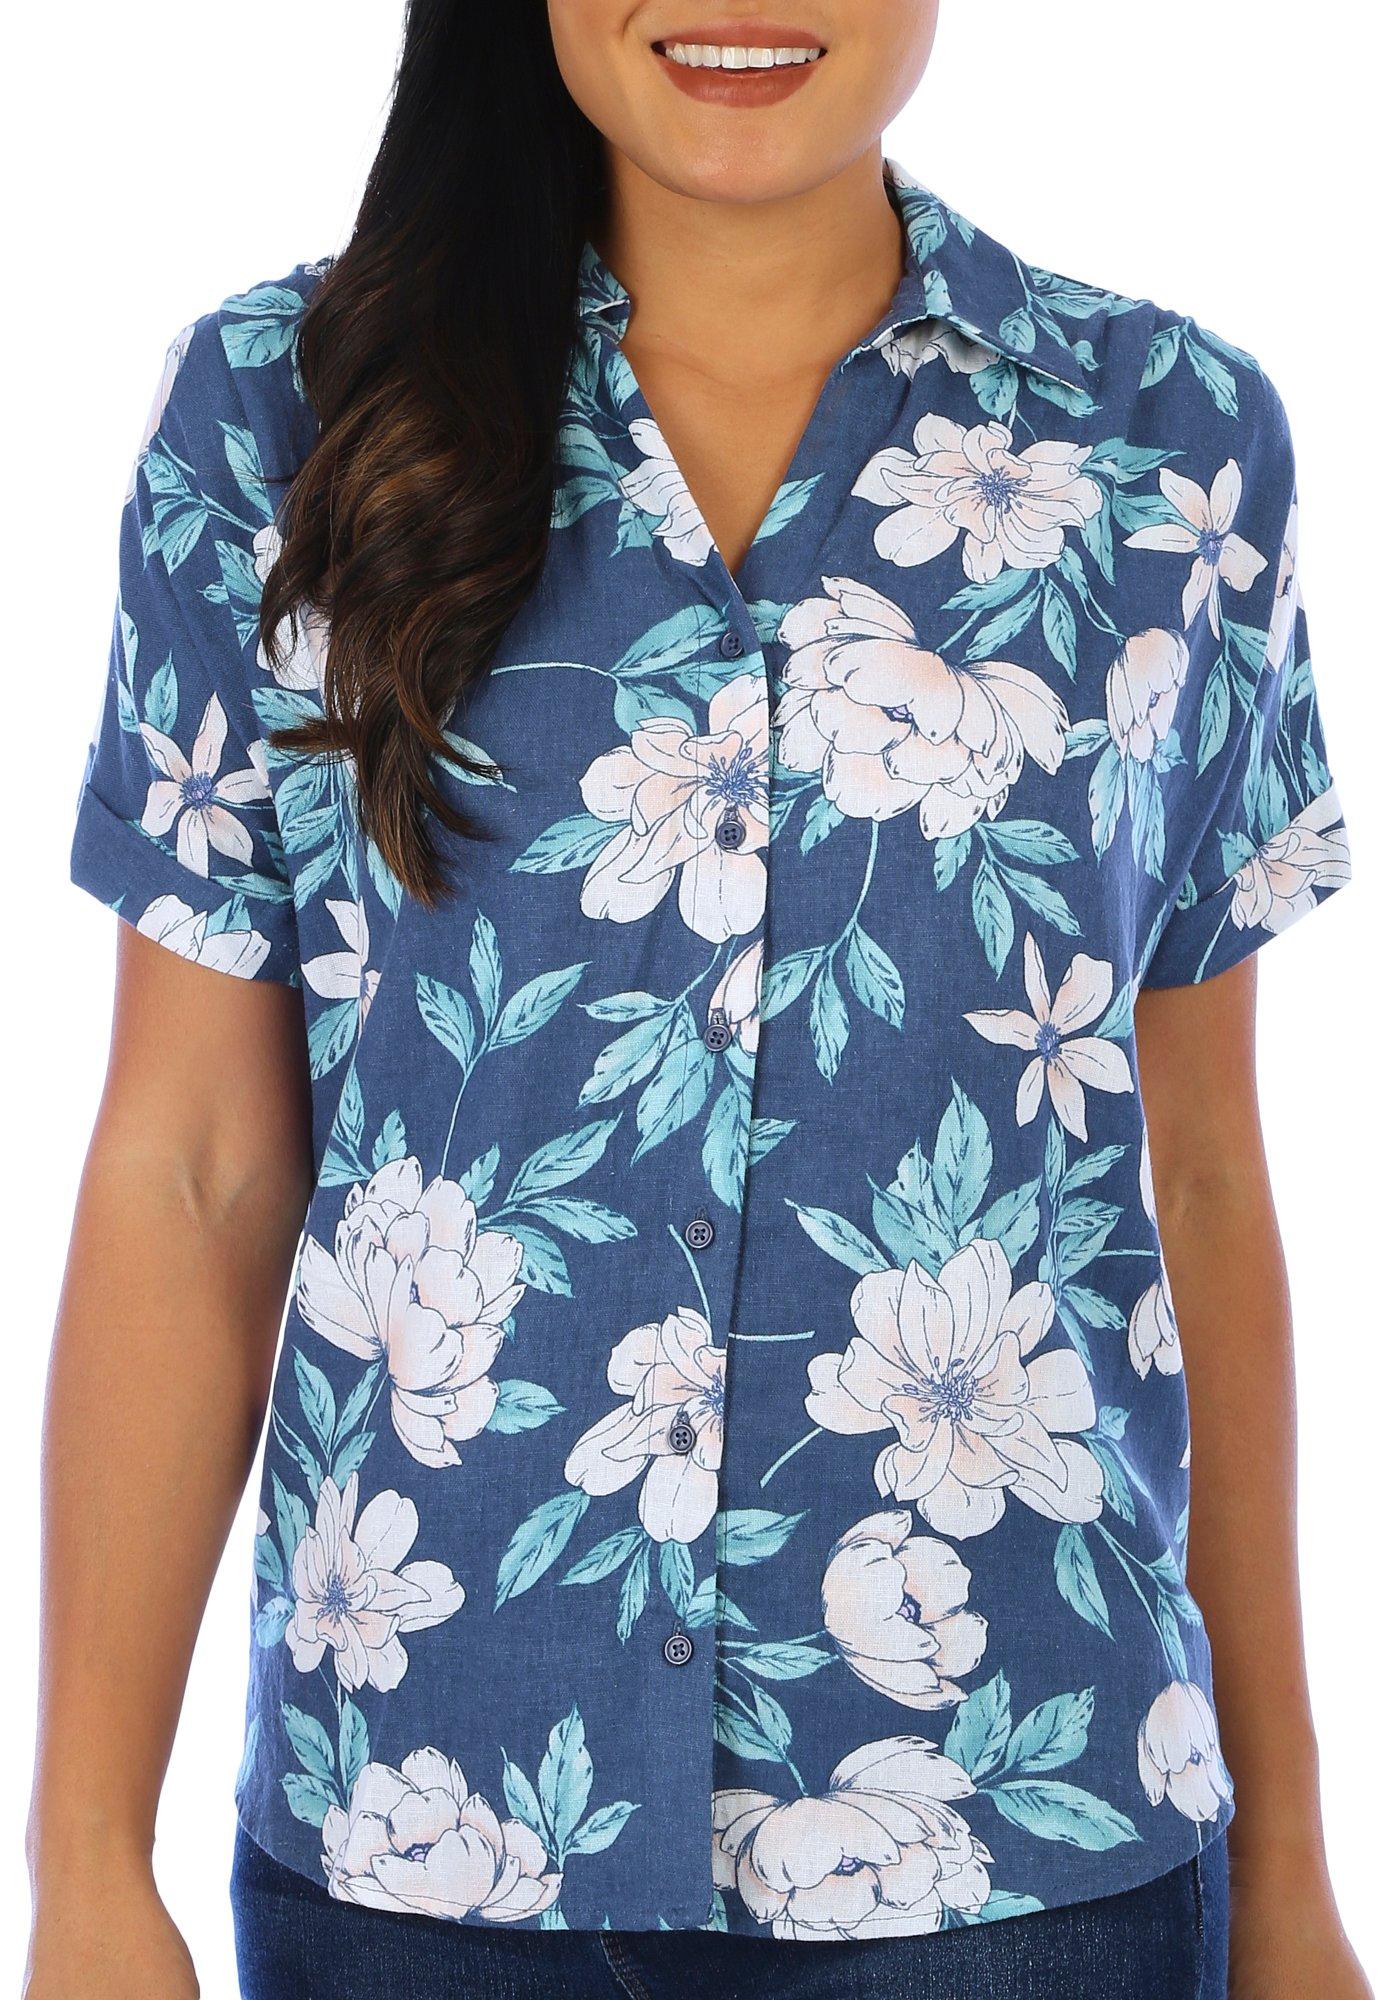 Blue Sol Womens Floral Print Dolman Short Sleeve Top